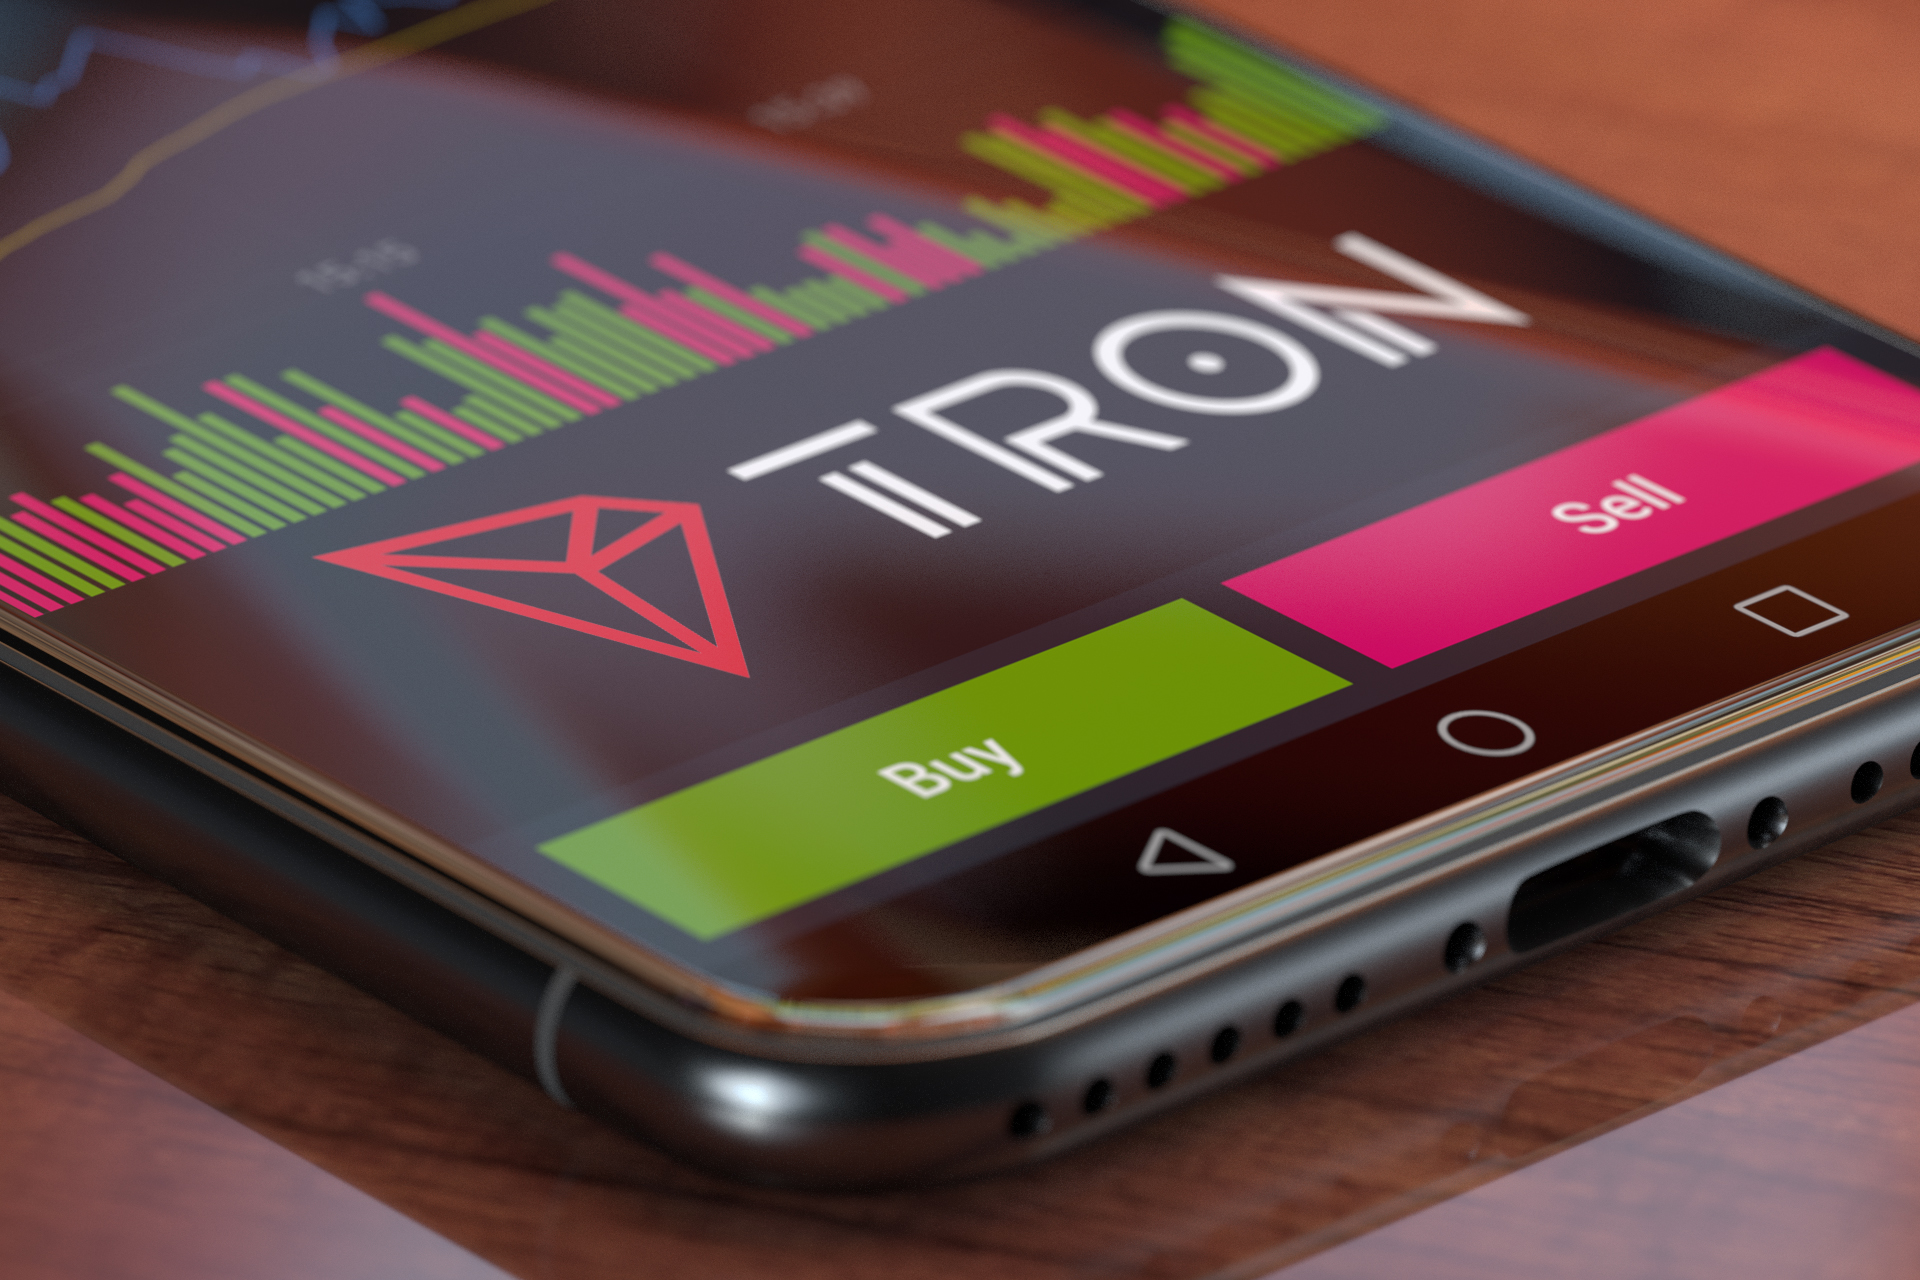 Tron exchange mobile app free image download